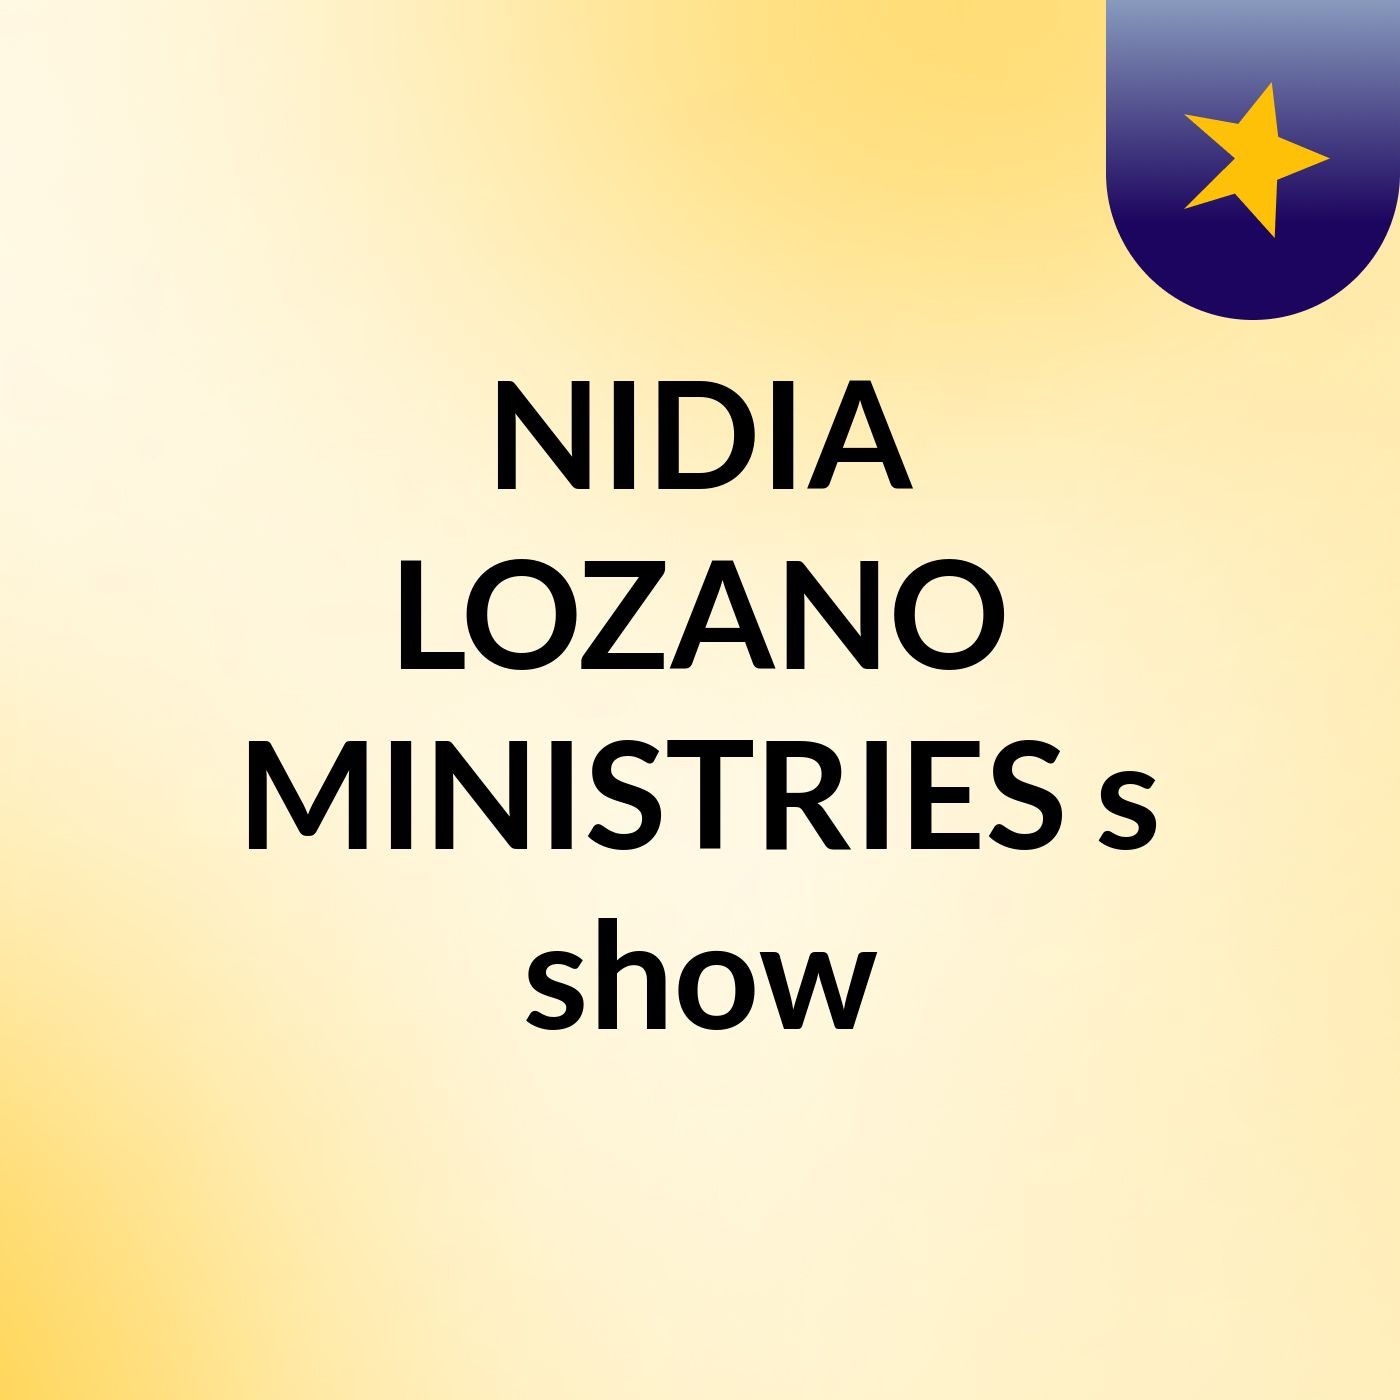 NIDIA LOZANO MINISTRIES's show